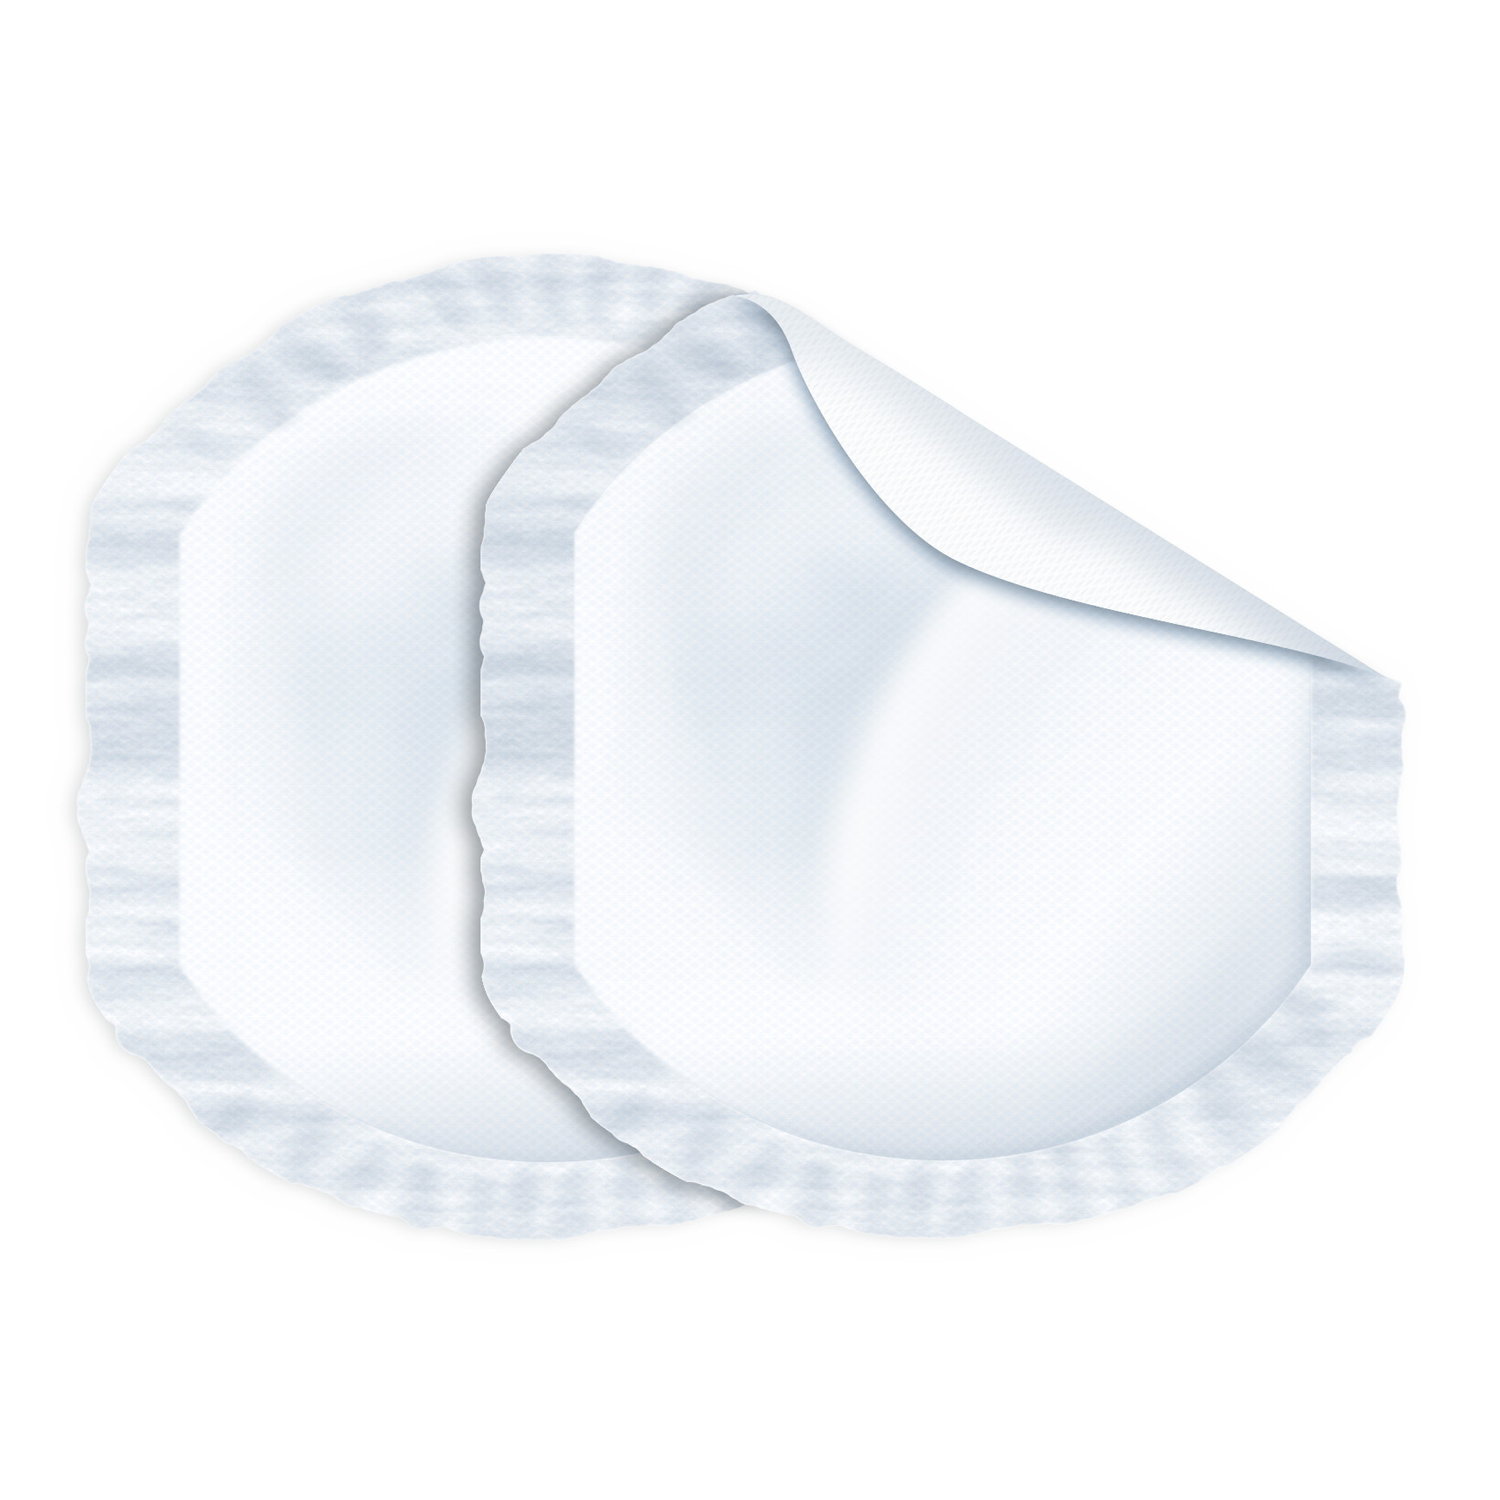 Dischetti assorbi-latte antibatterici - 60 pz - Chicco